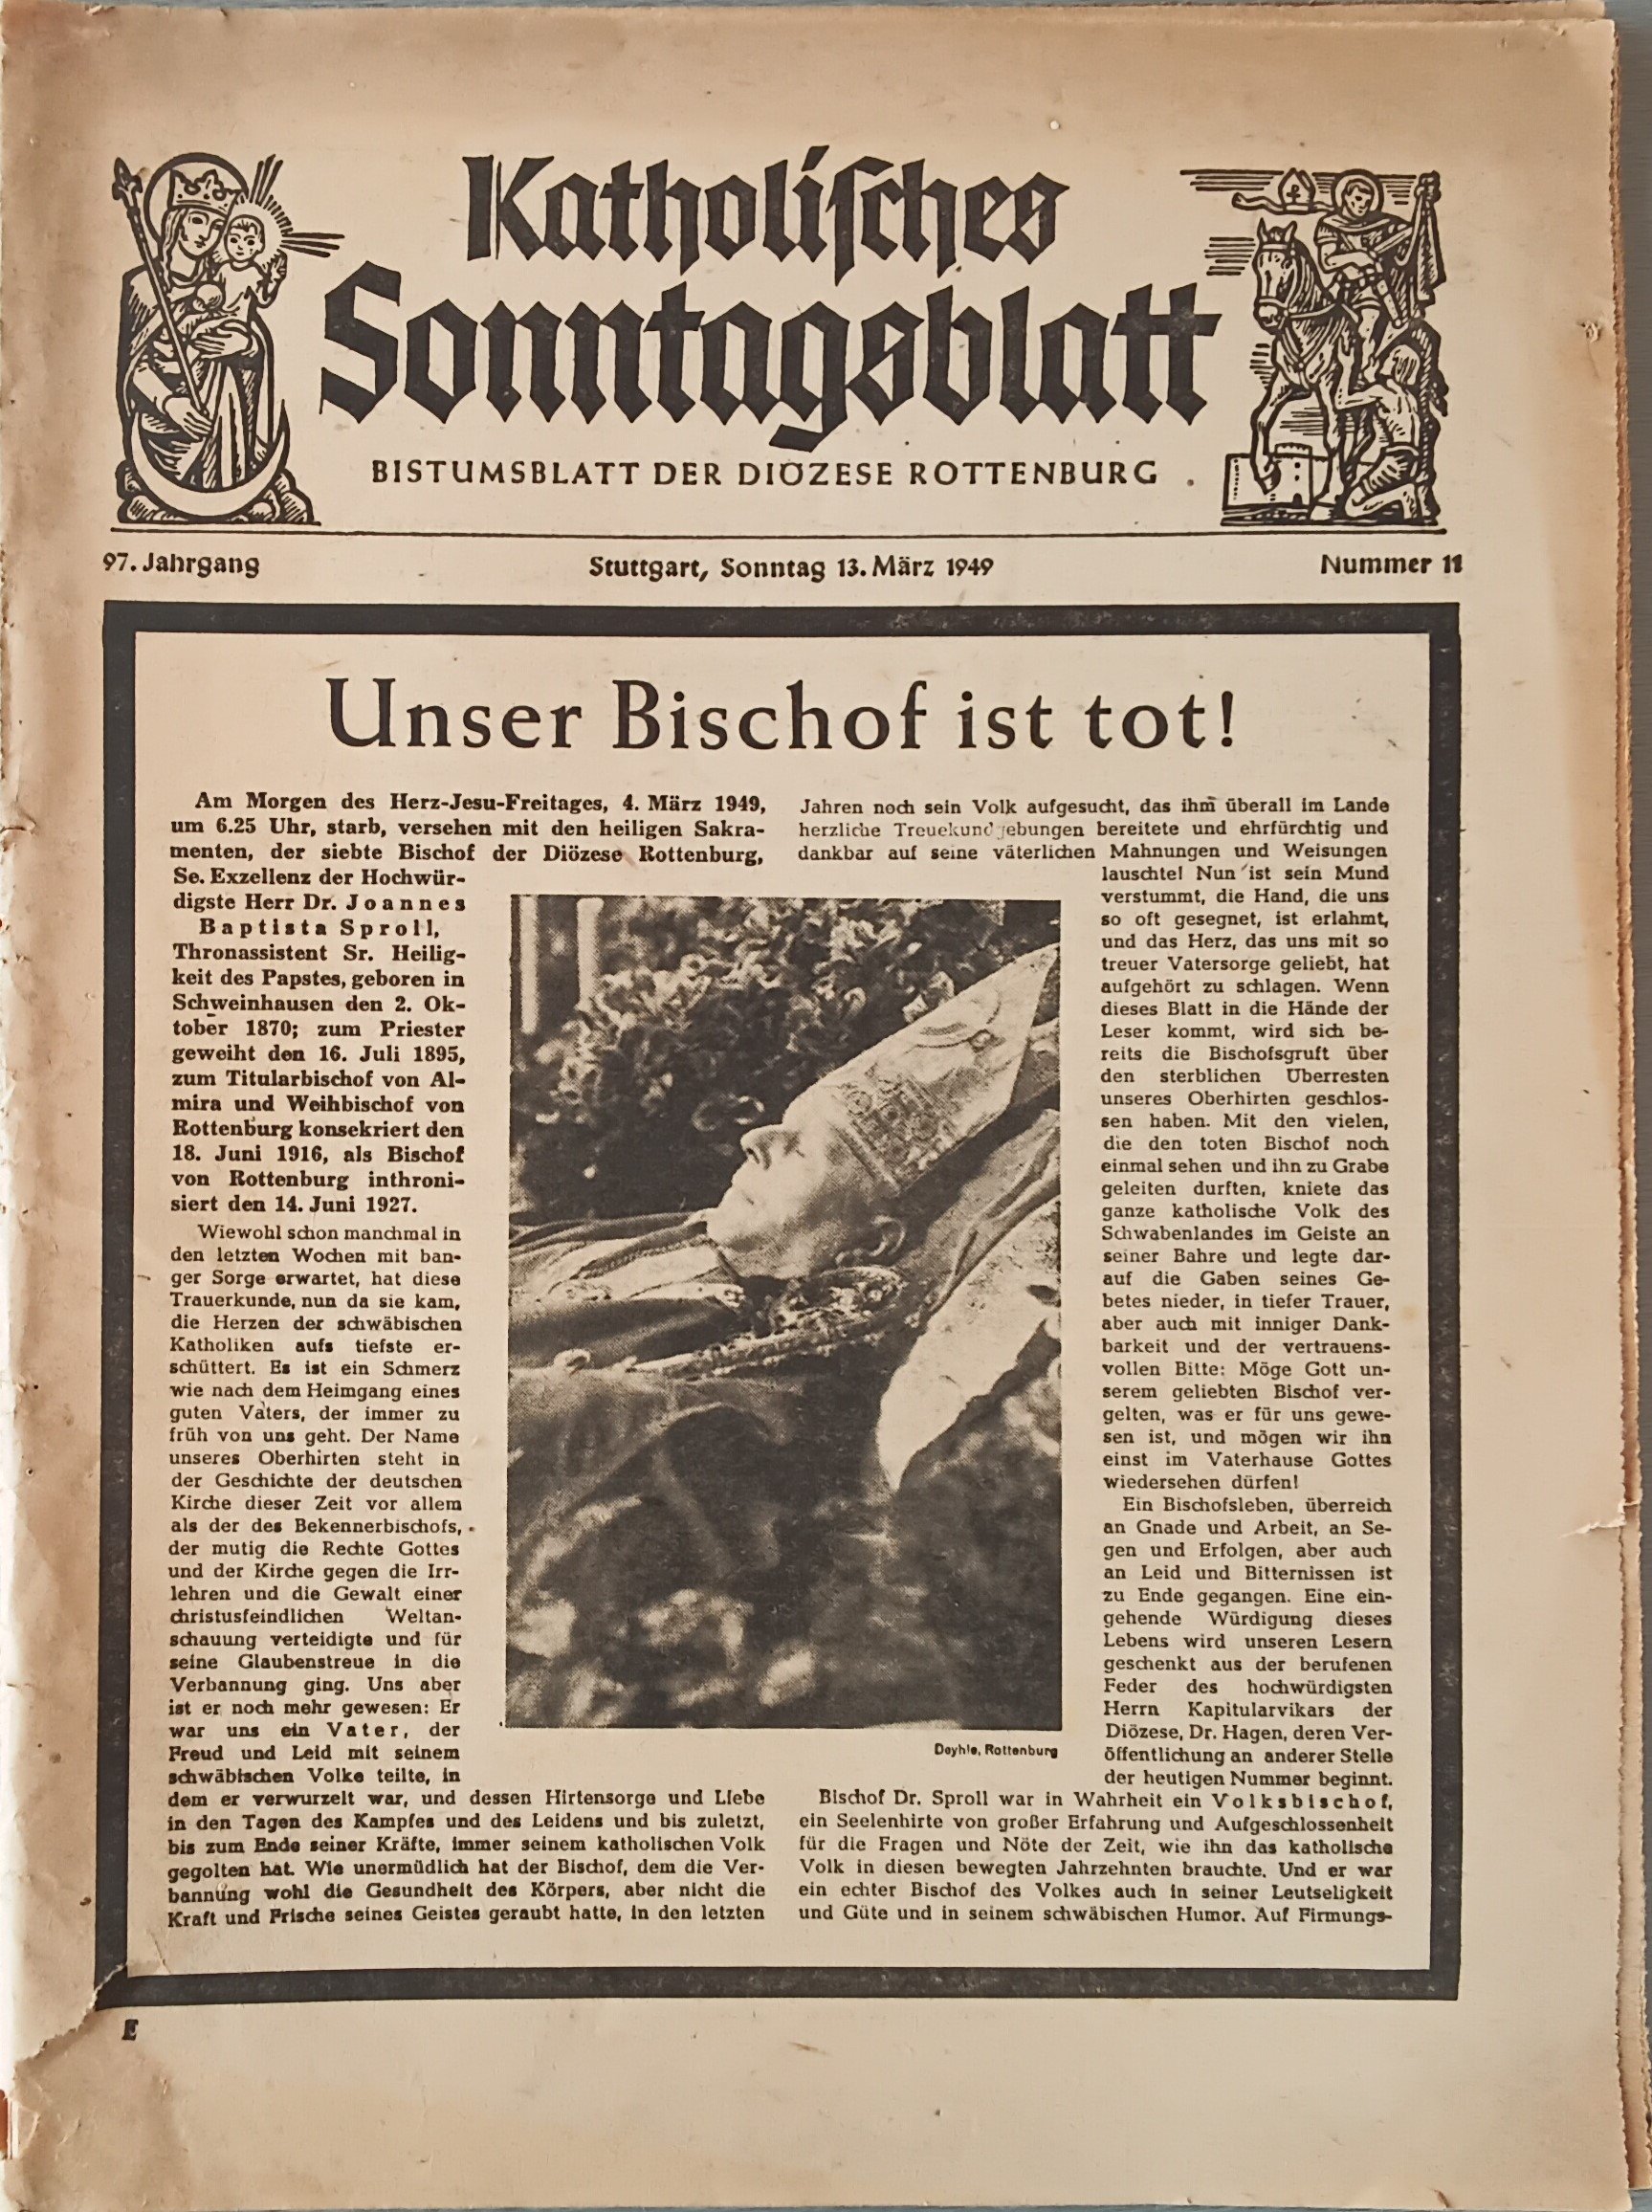 Katholisches Sonntagsblatt 13. März 1949 (Heimatmuseum Aichstetten CC BY-NC-SA)